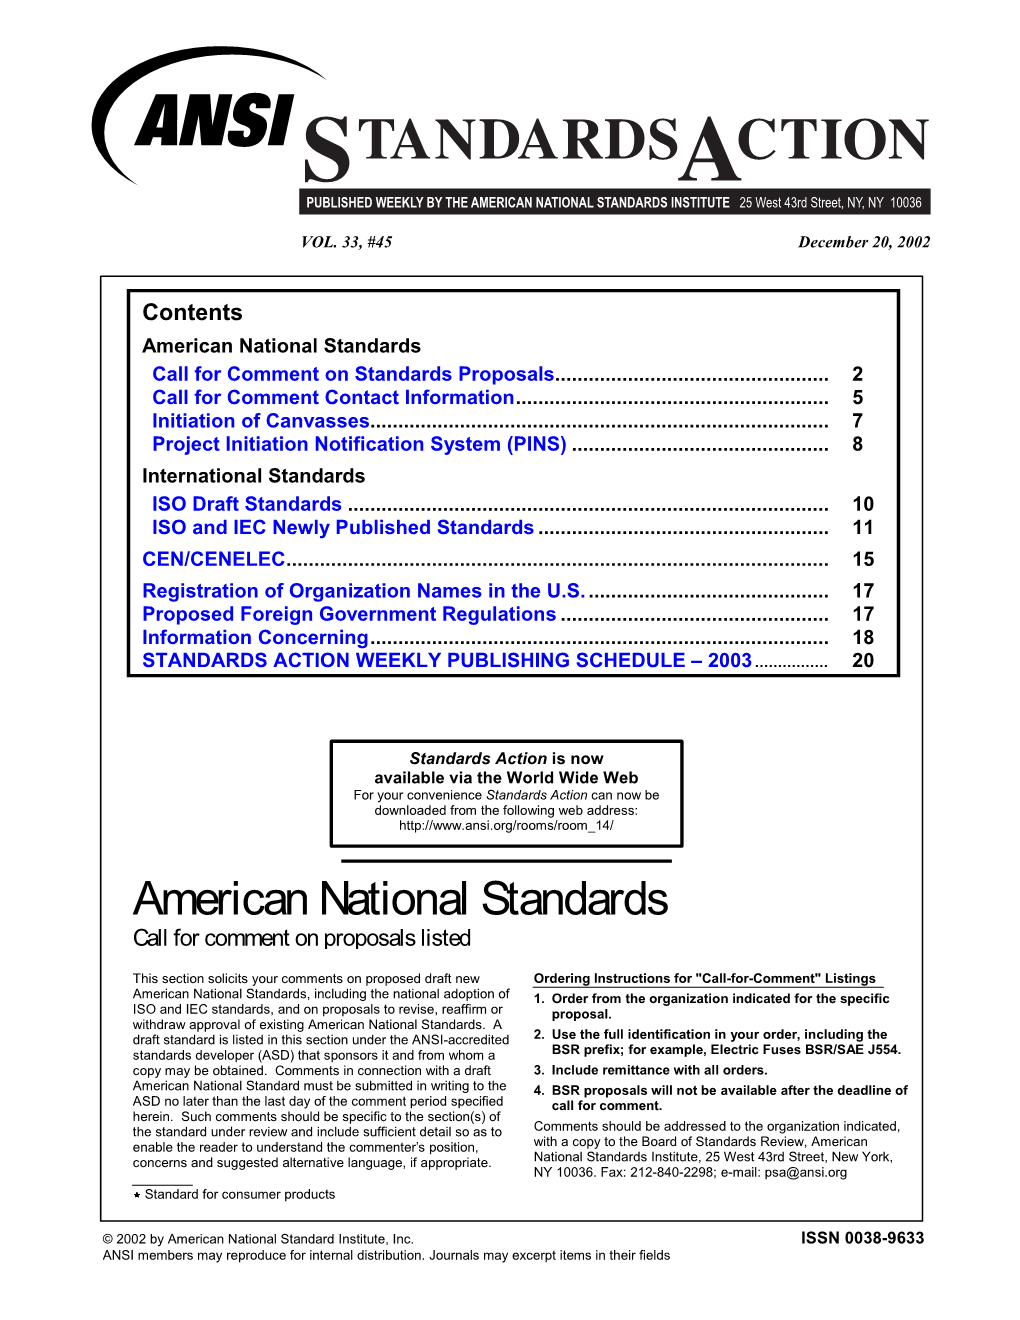 Standards Action Layout SAV3345